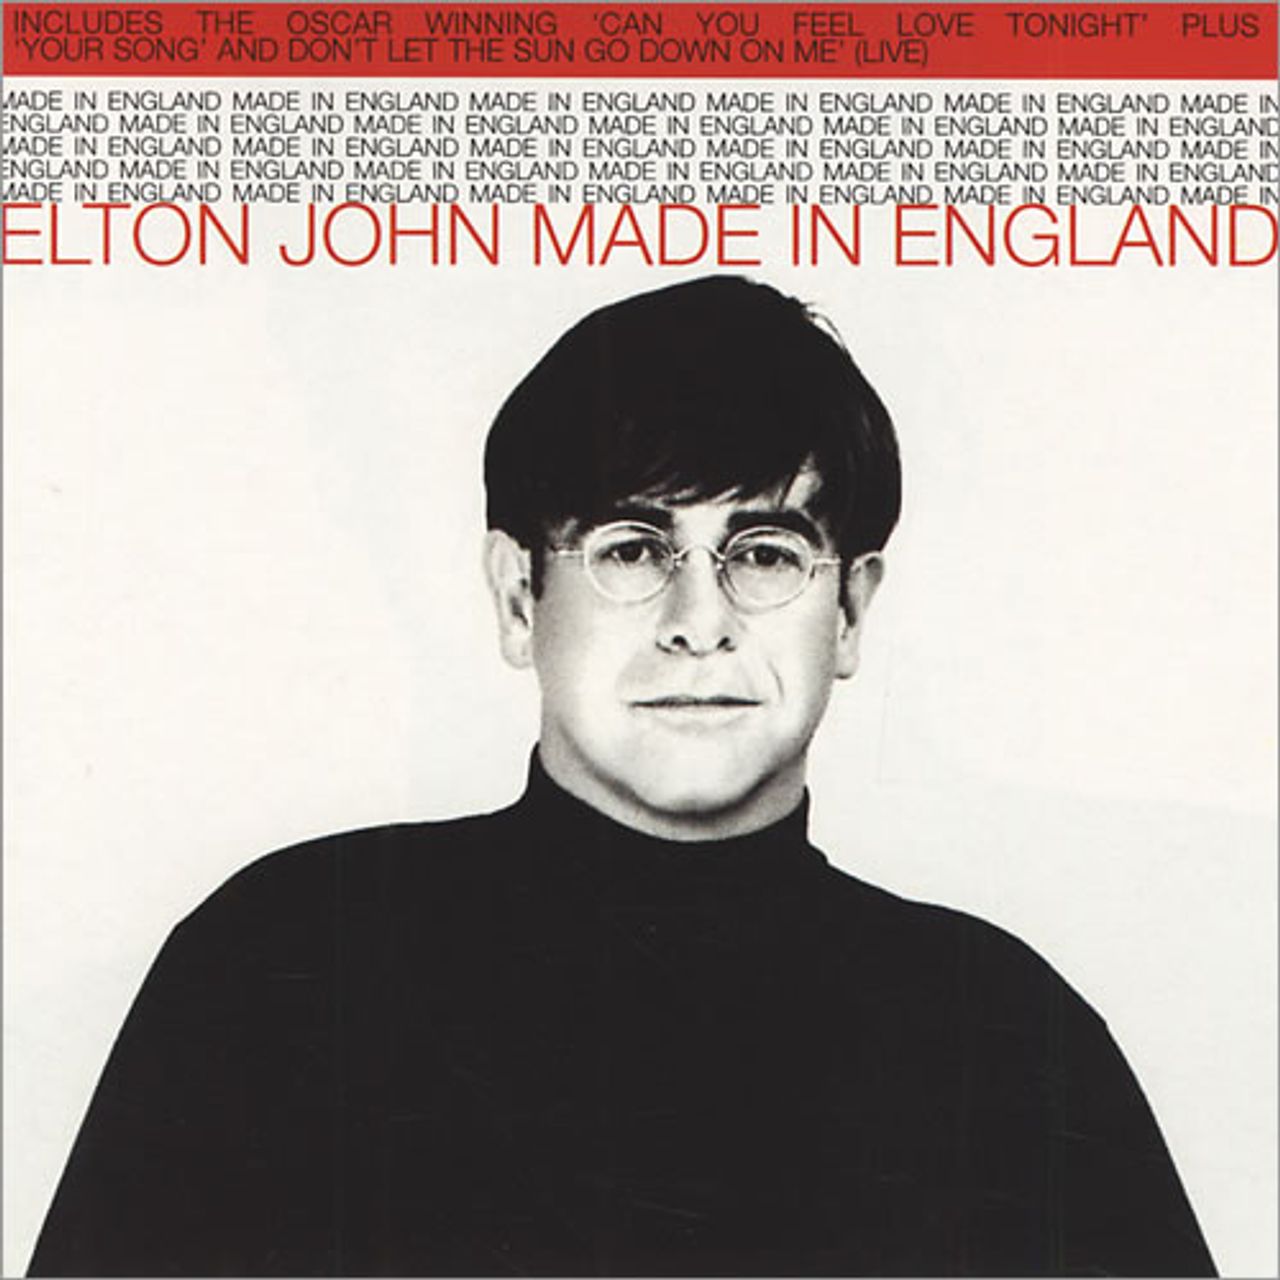 Elton John Made In England UK 2-CD single set — RareVinyl.com